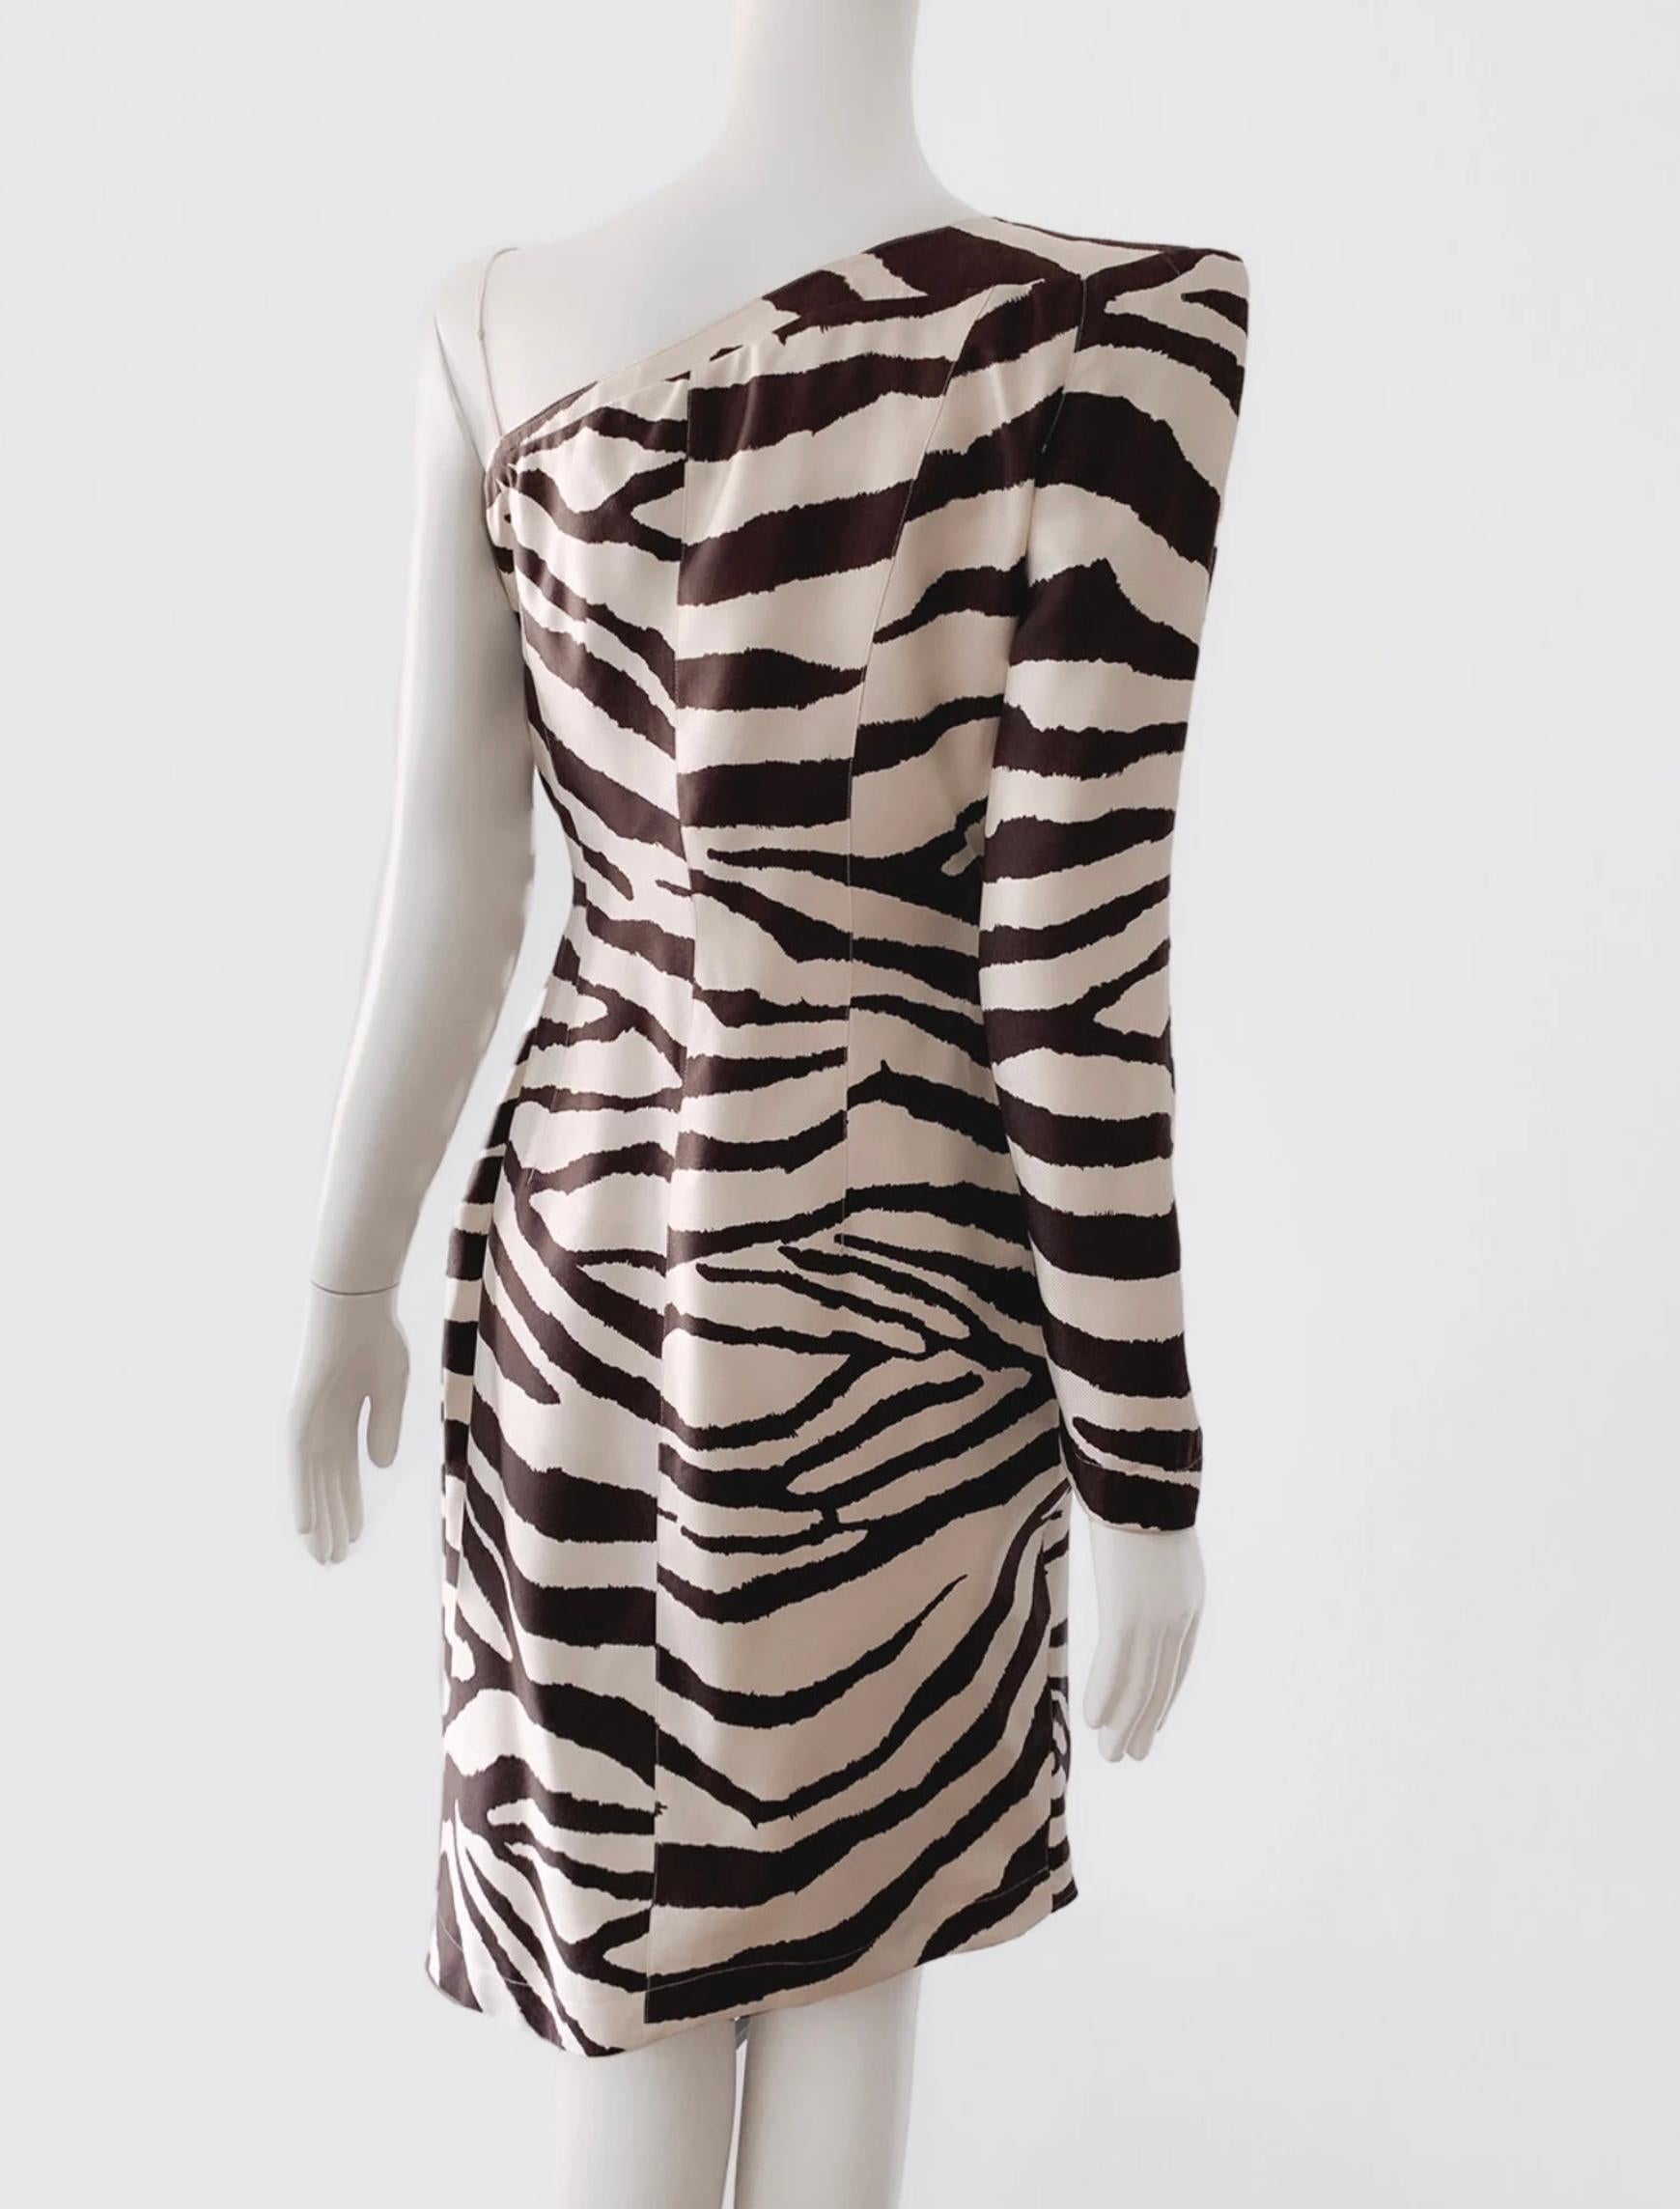 Stunning Thierry Mugler Silk Dress SS1998 Zebra Print Single Shoulder Stole For Sale 2